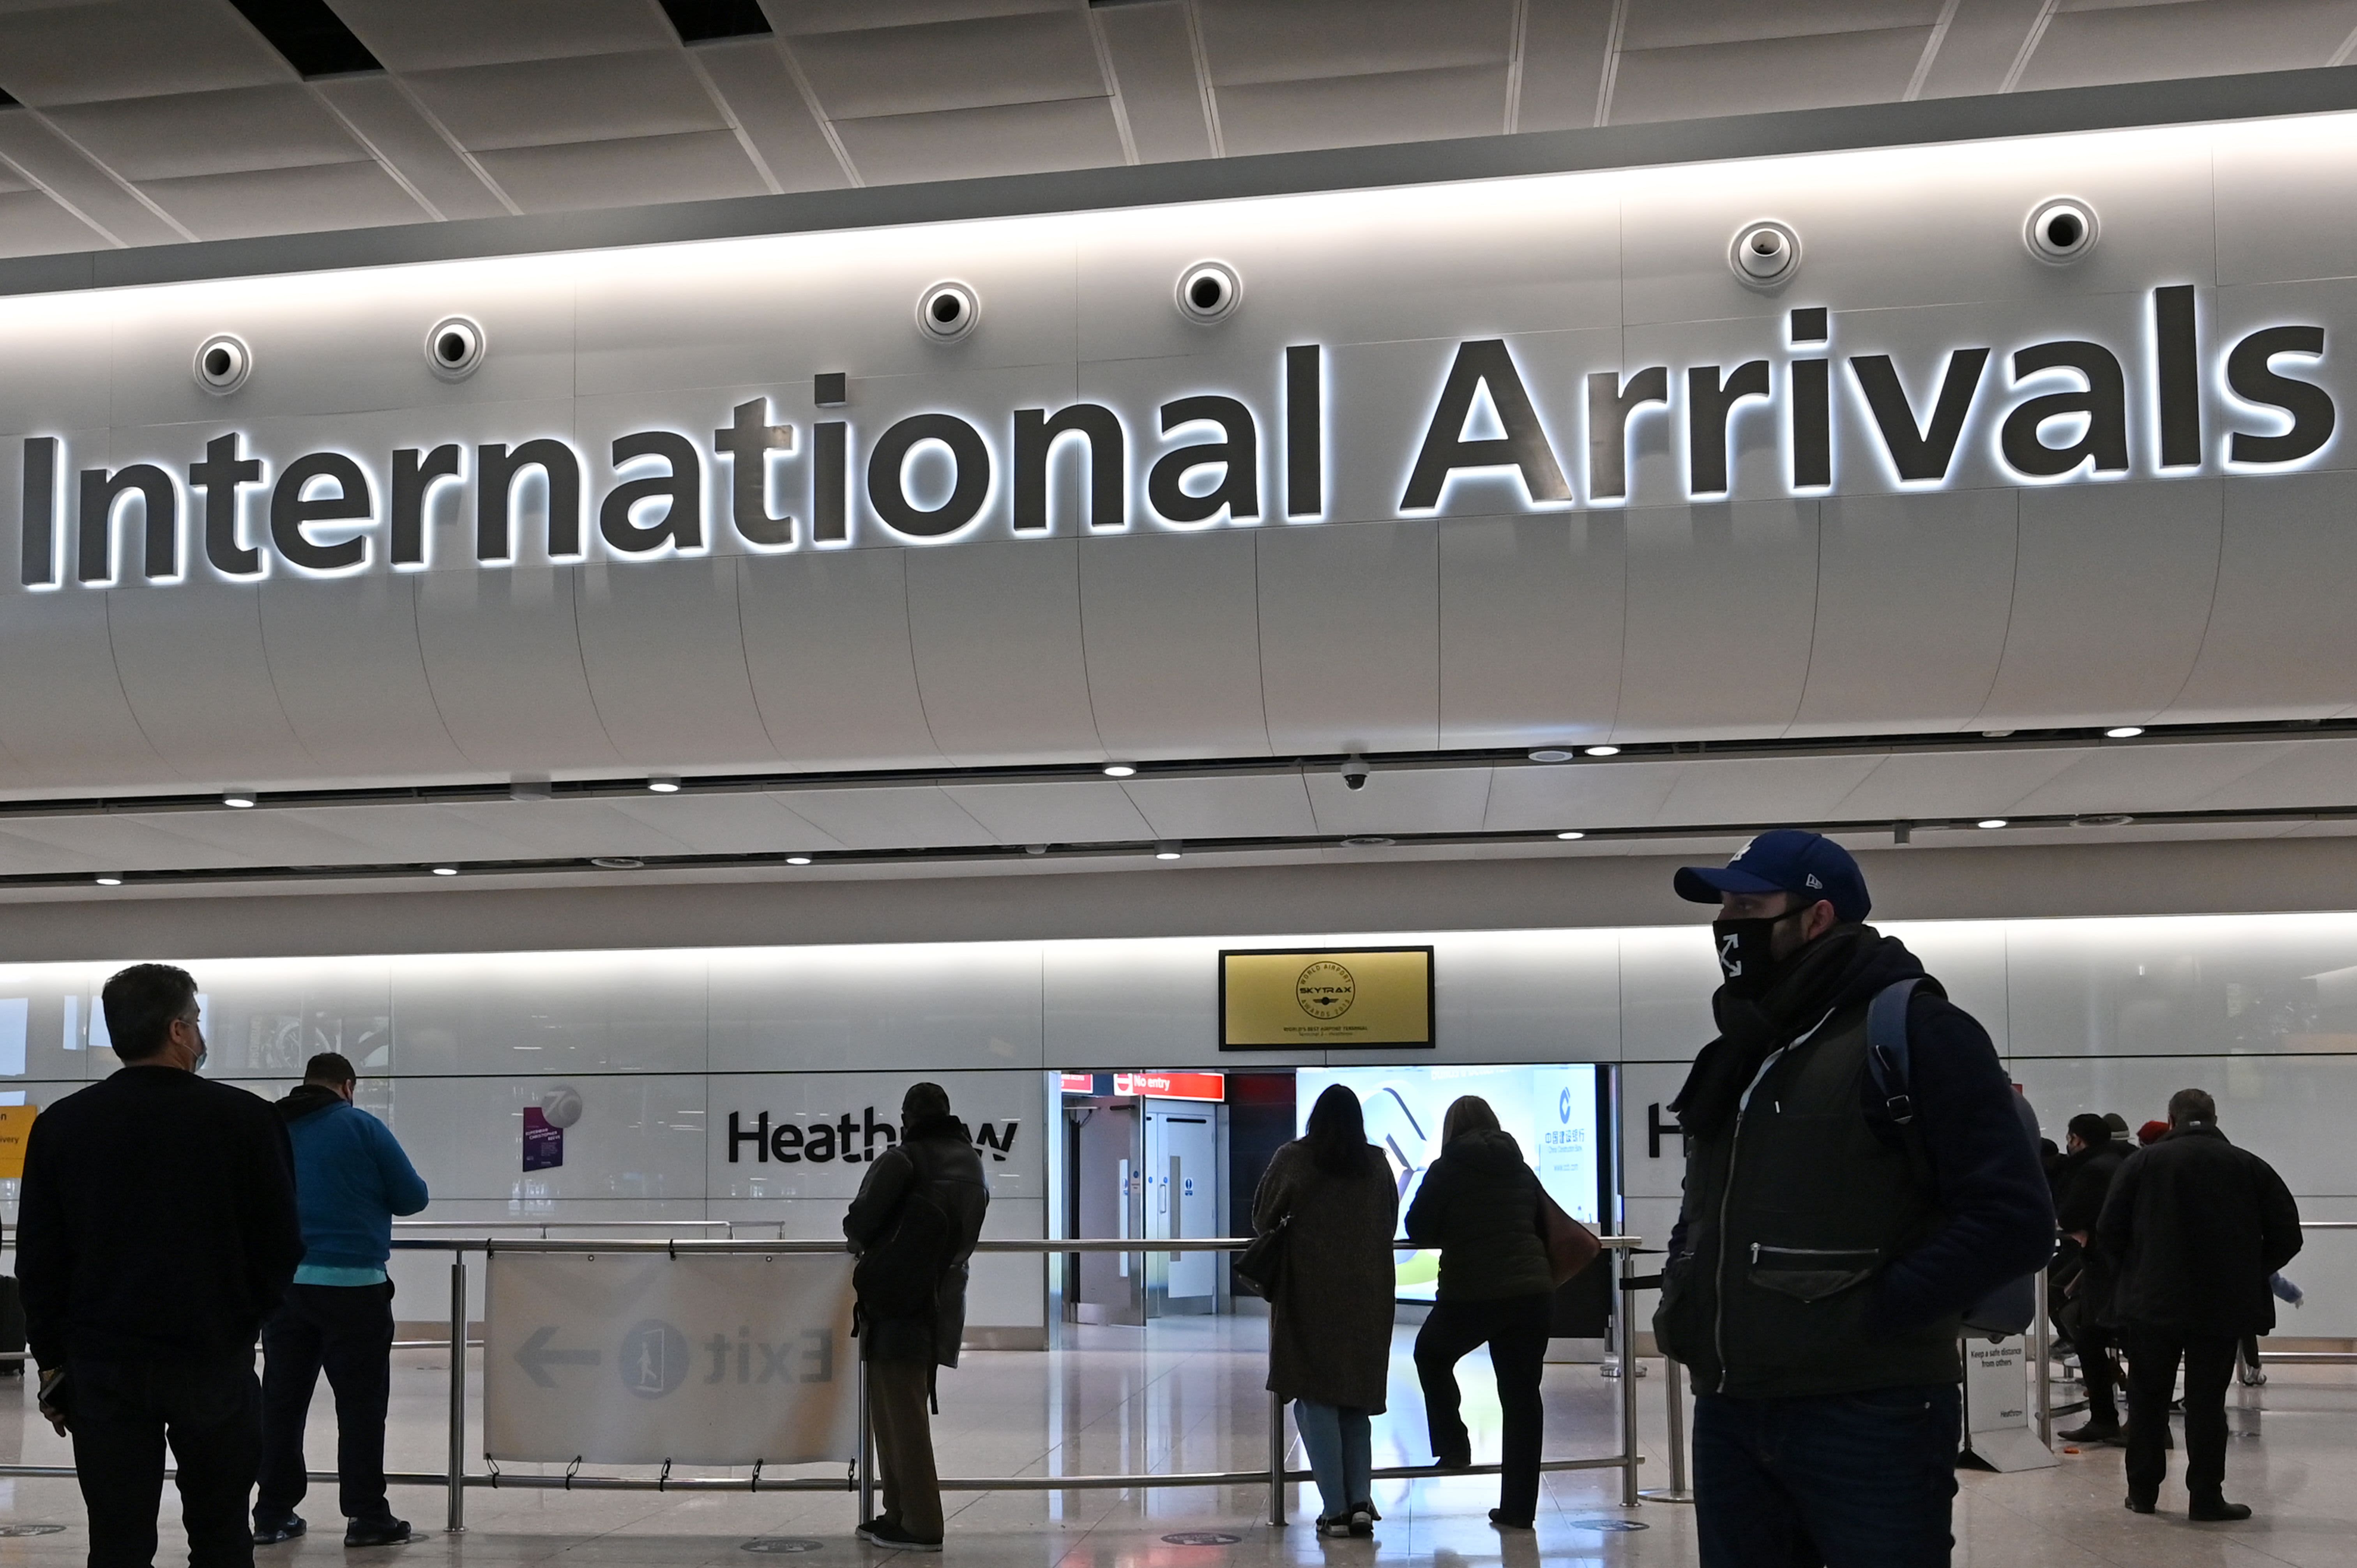 The IATA application can restart international flights without quarantine